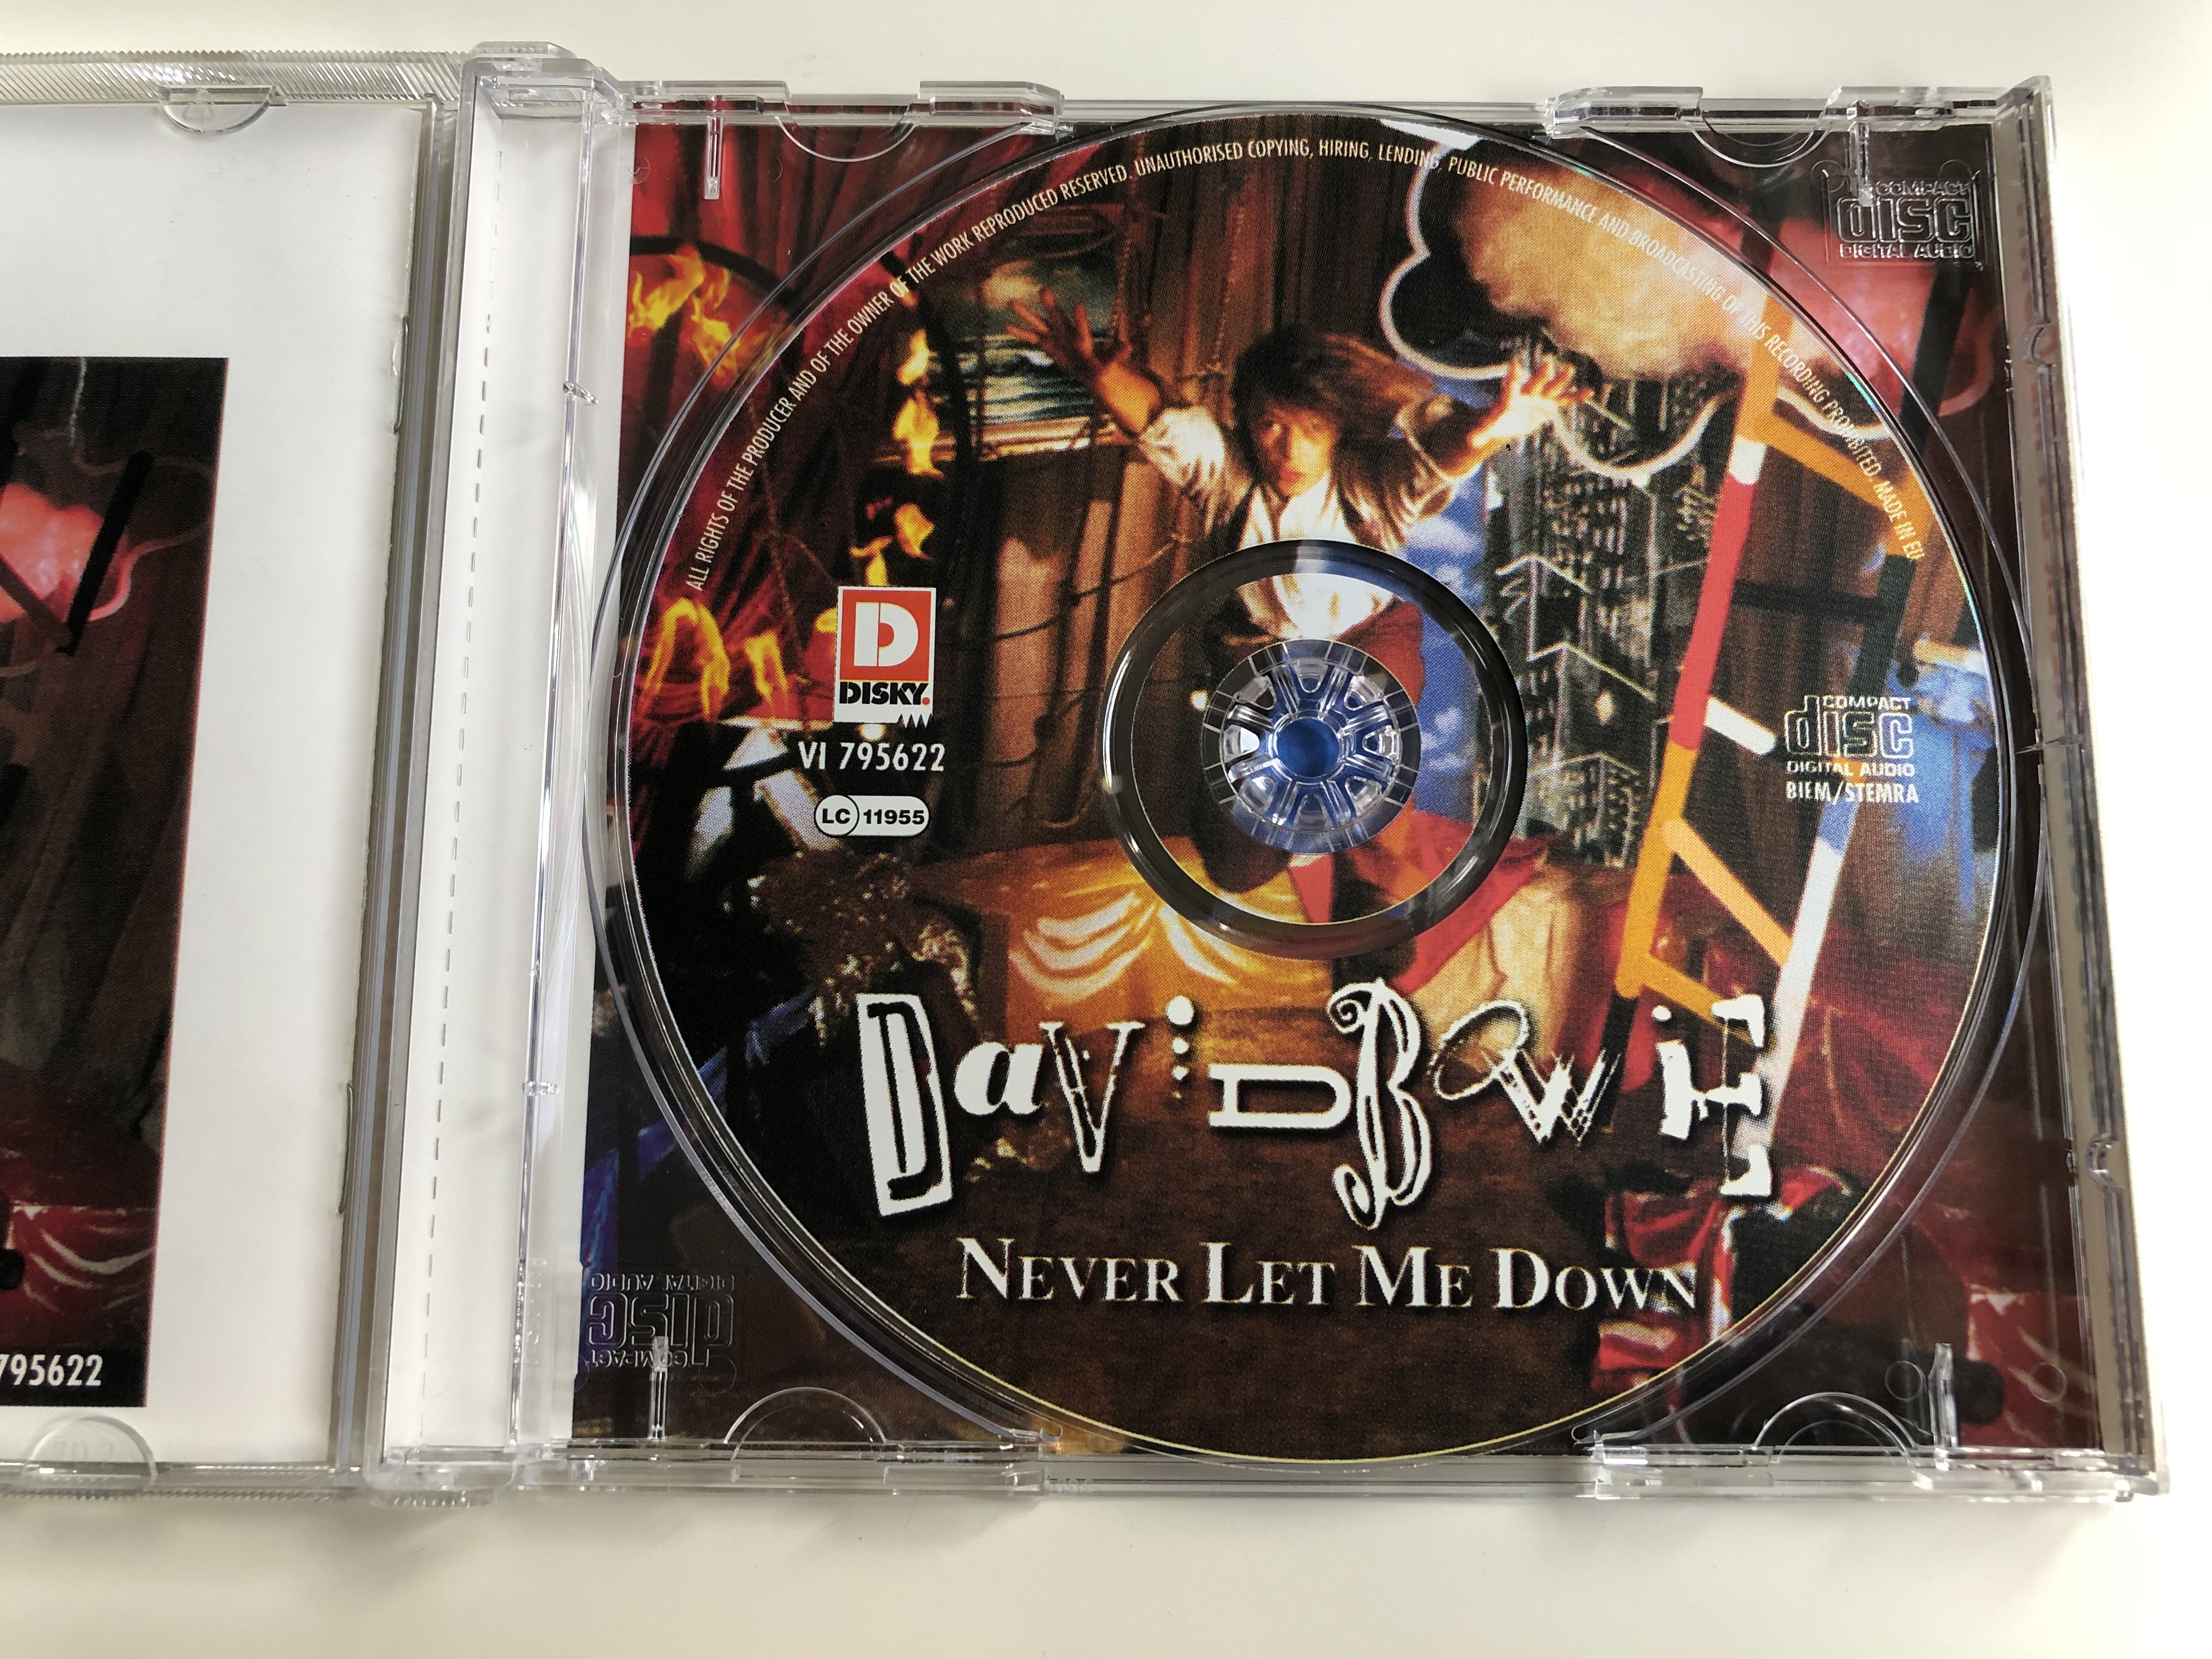 david-bowie-never-let-me-down-disky-audio-cd-2002-vi-795622-5-.jpg